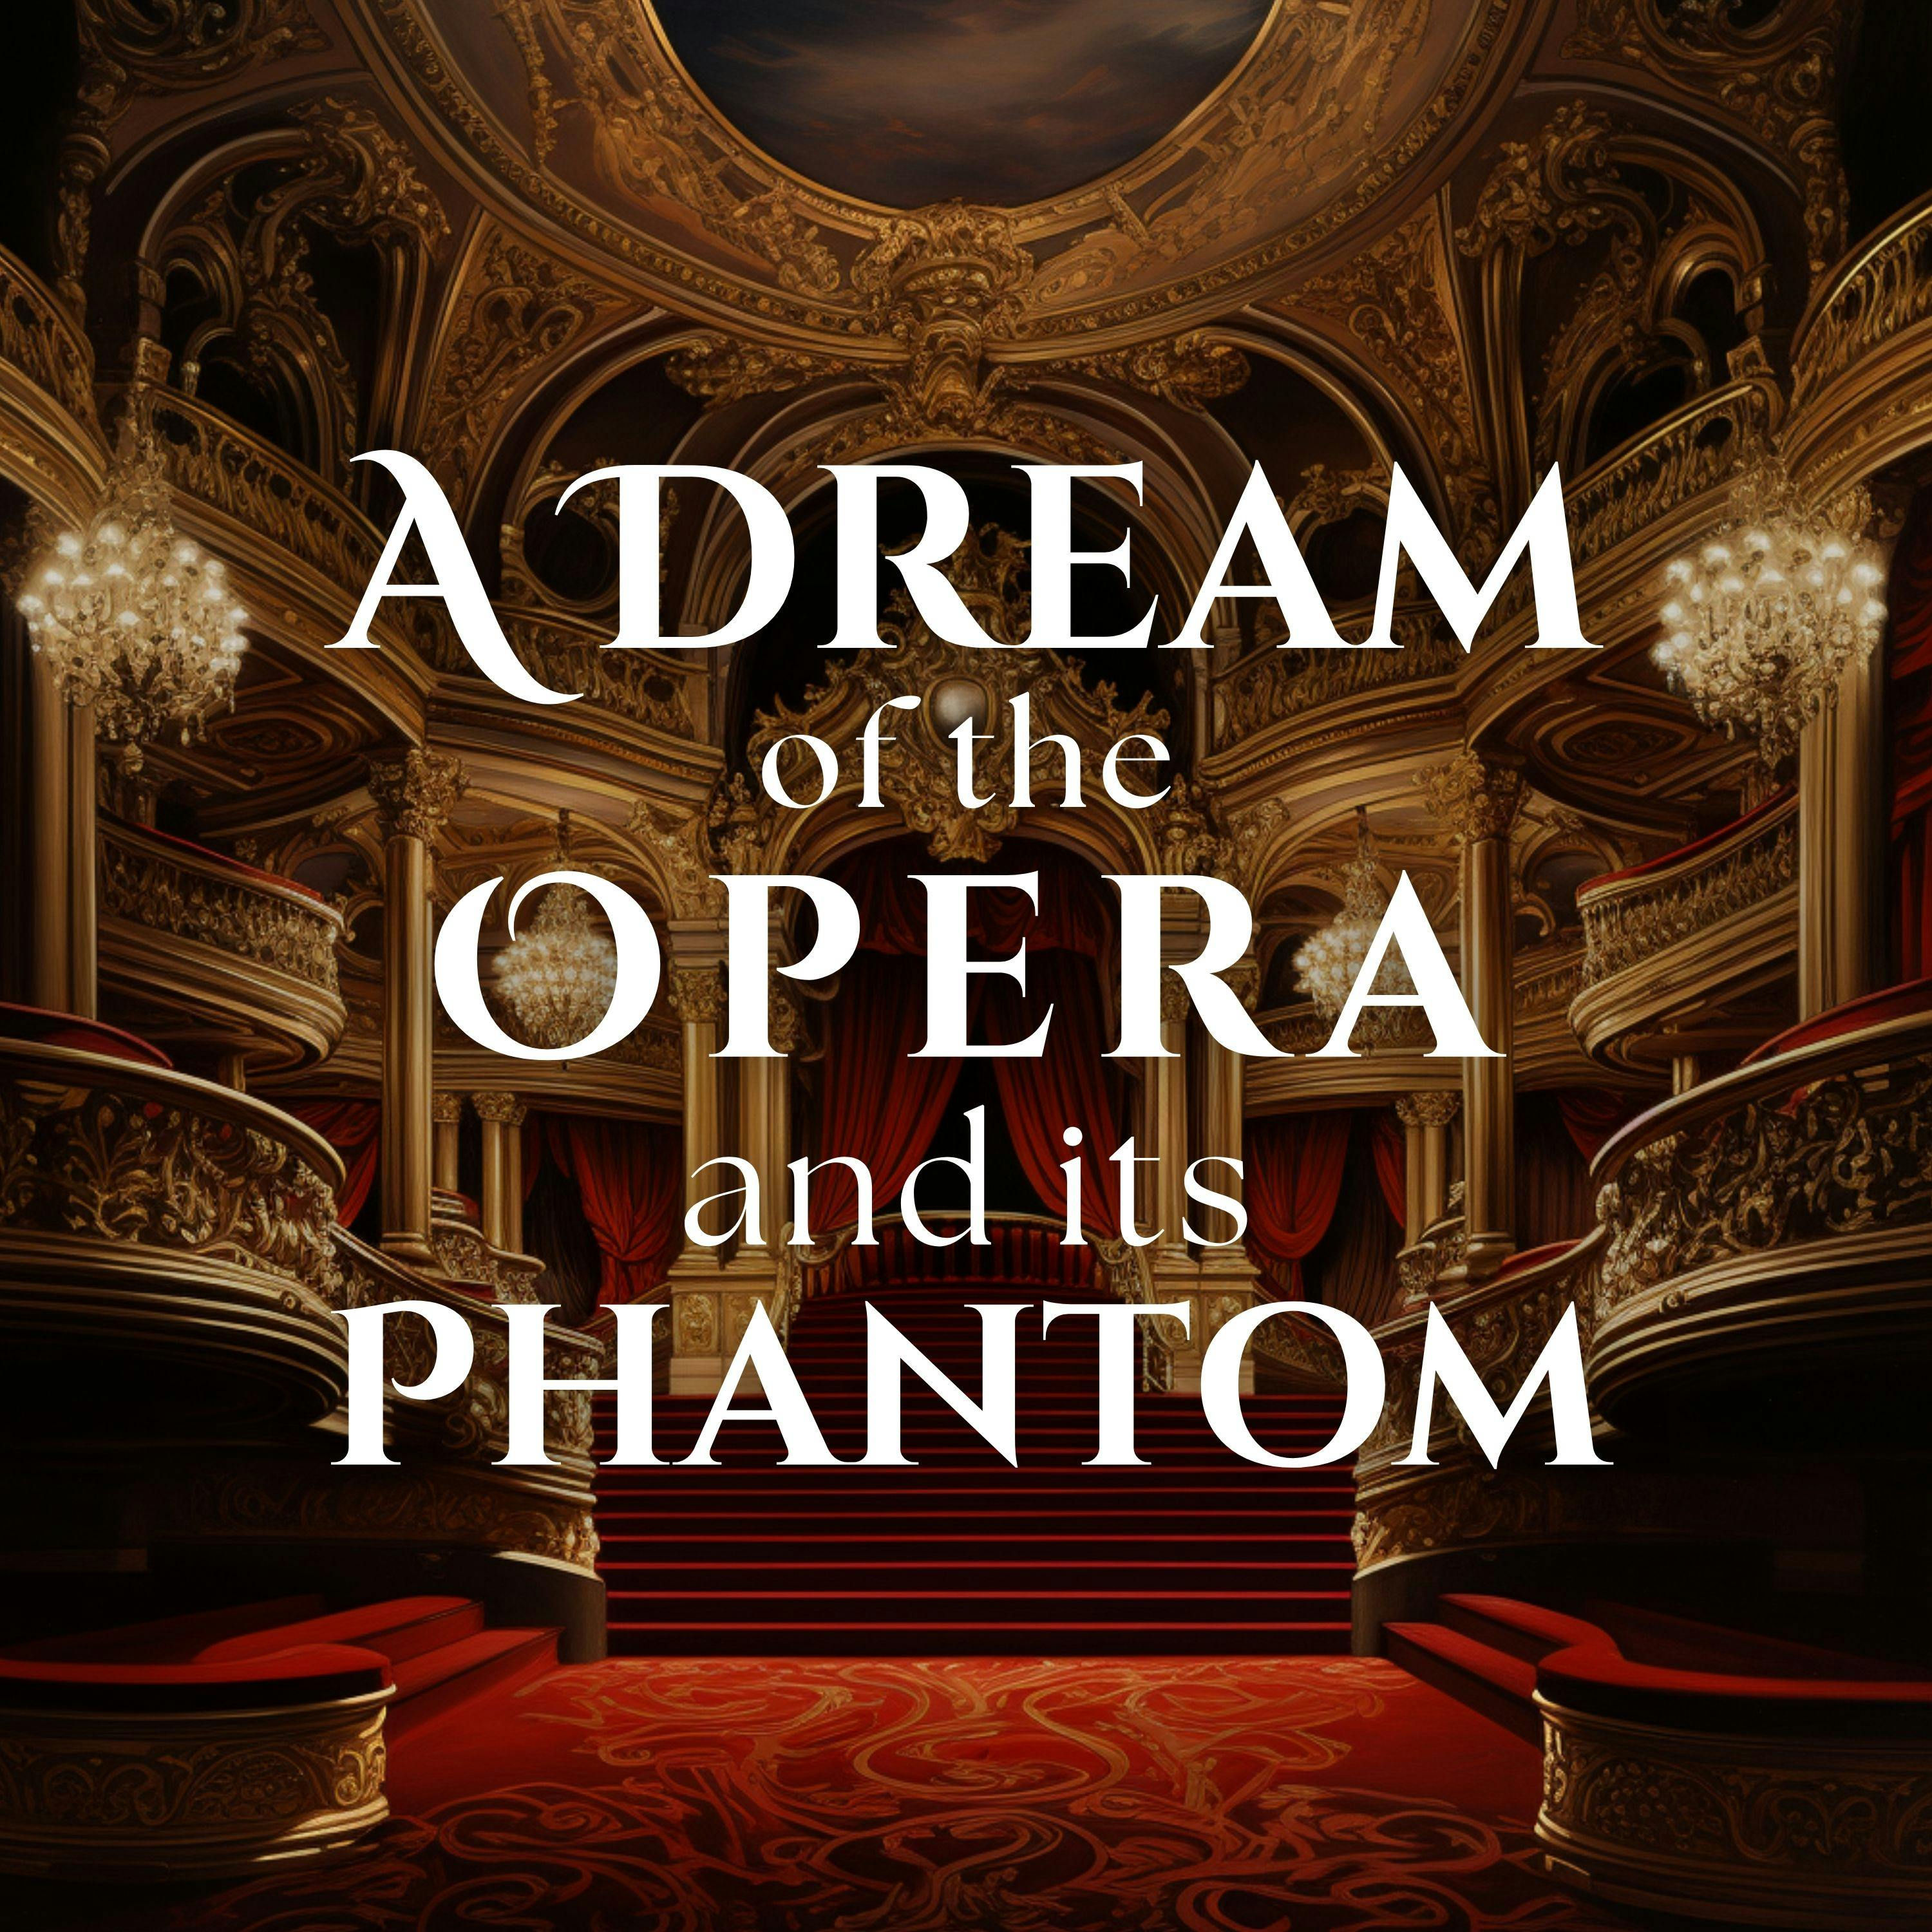 A Dream of the Opera and its Phantom